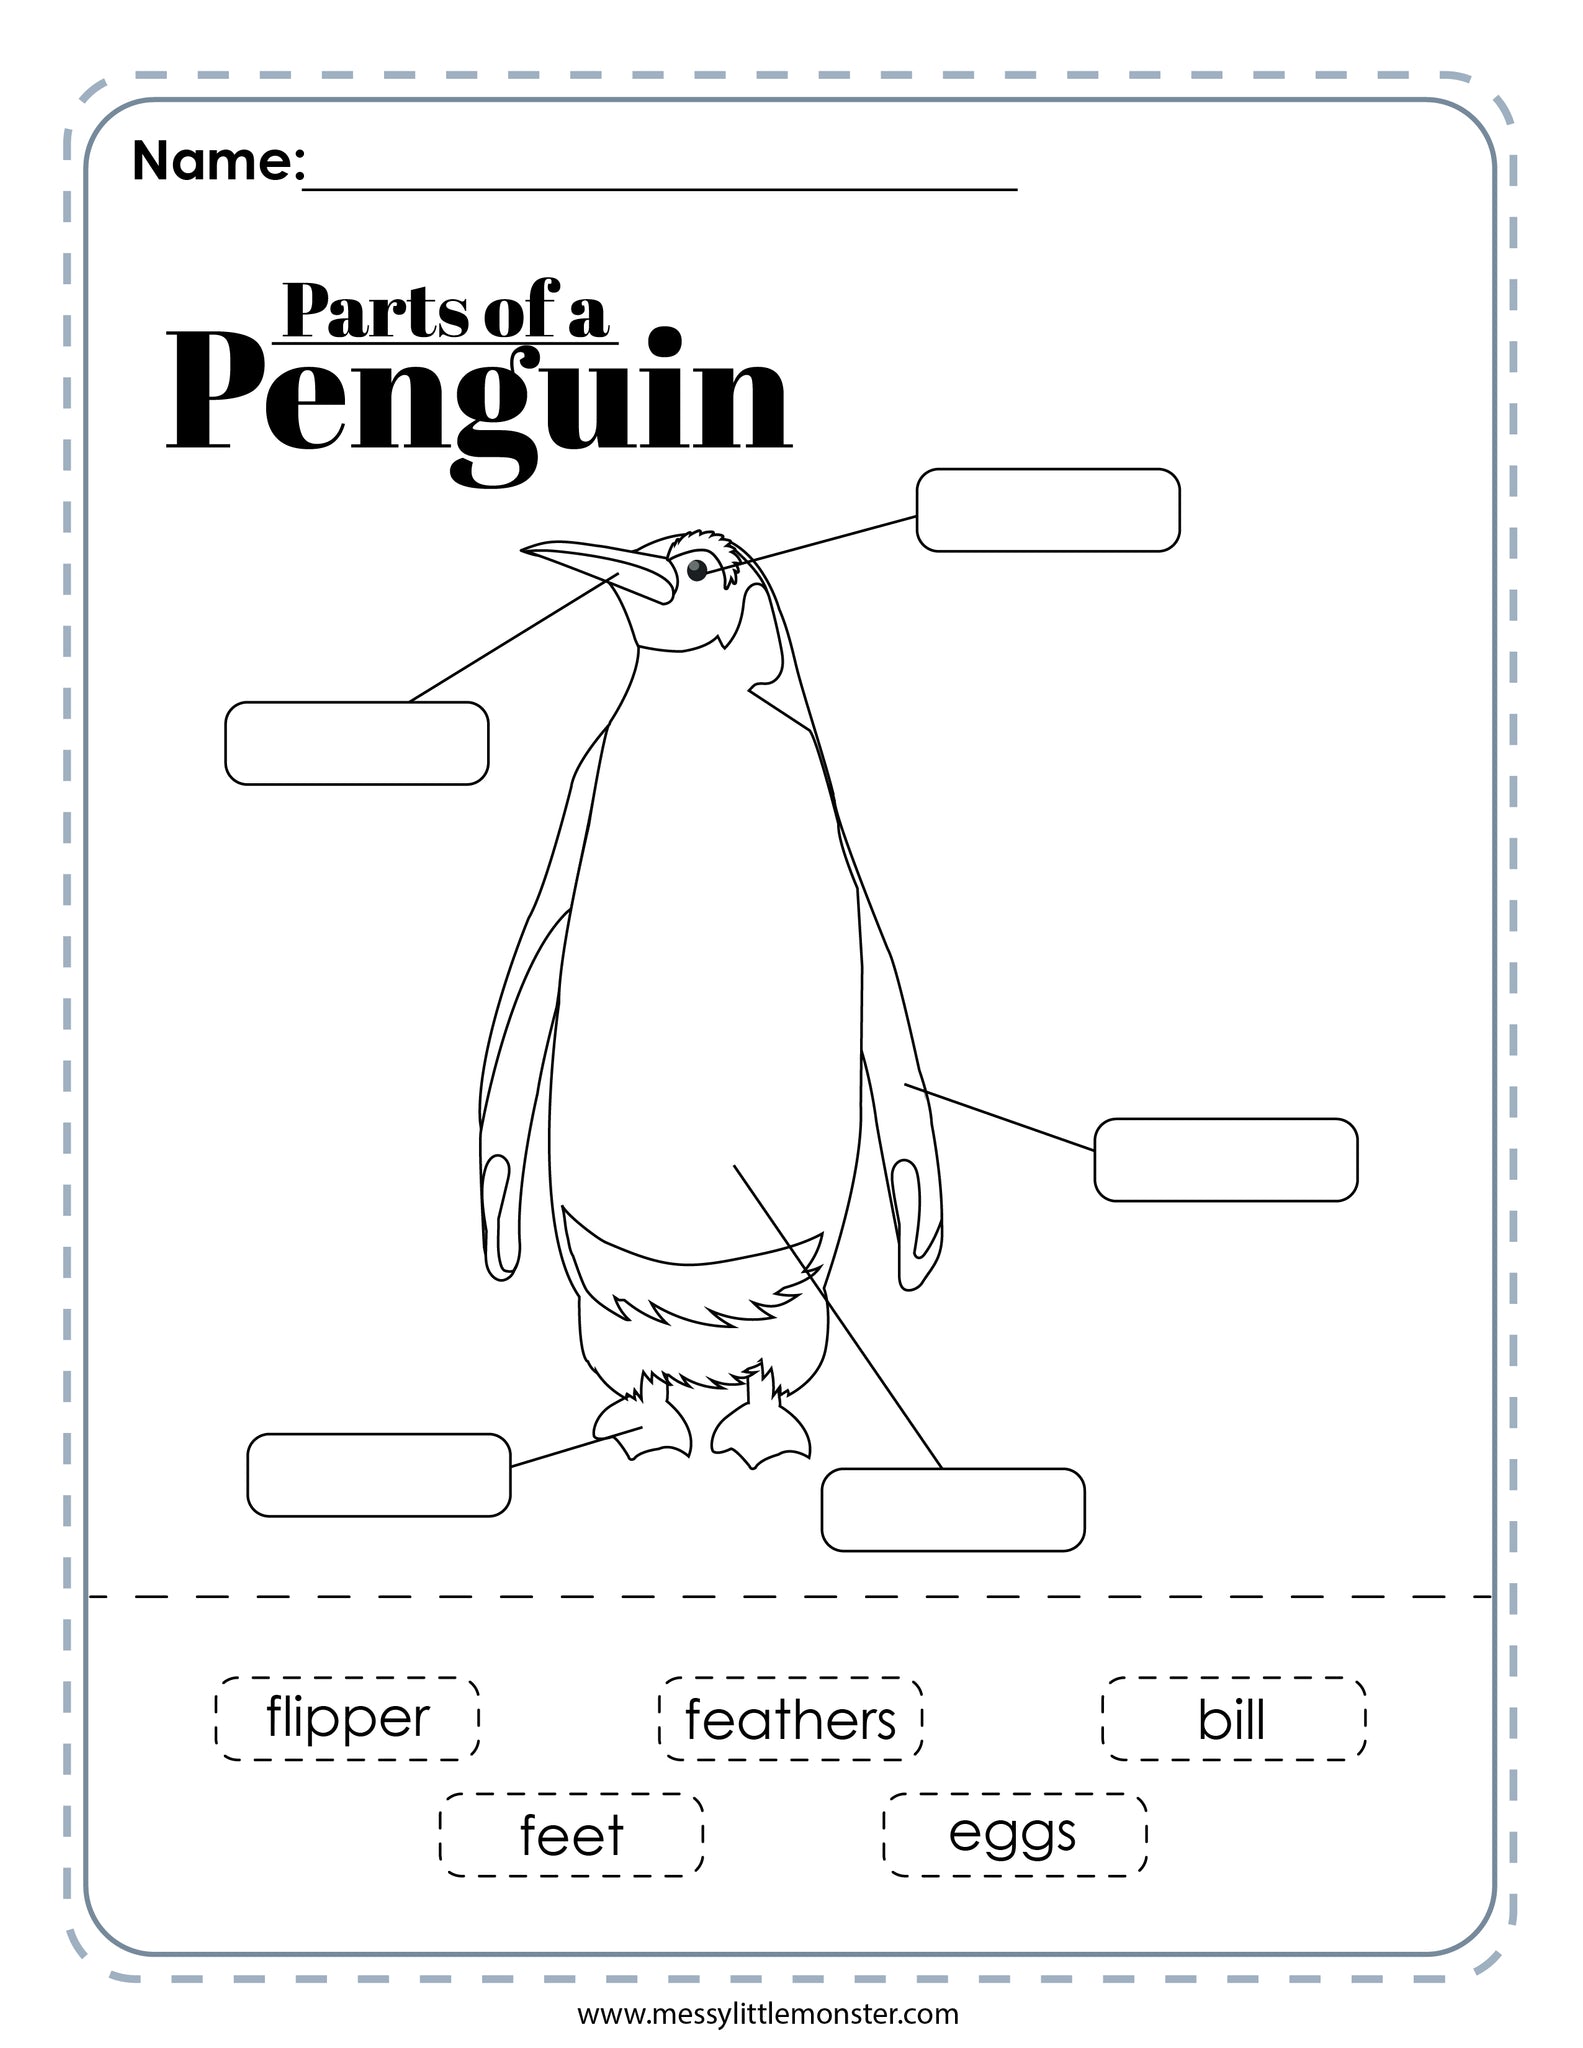 Penguin printable activities â messy little monster shop